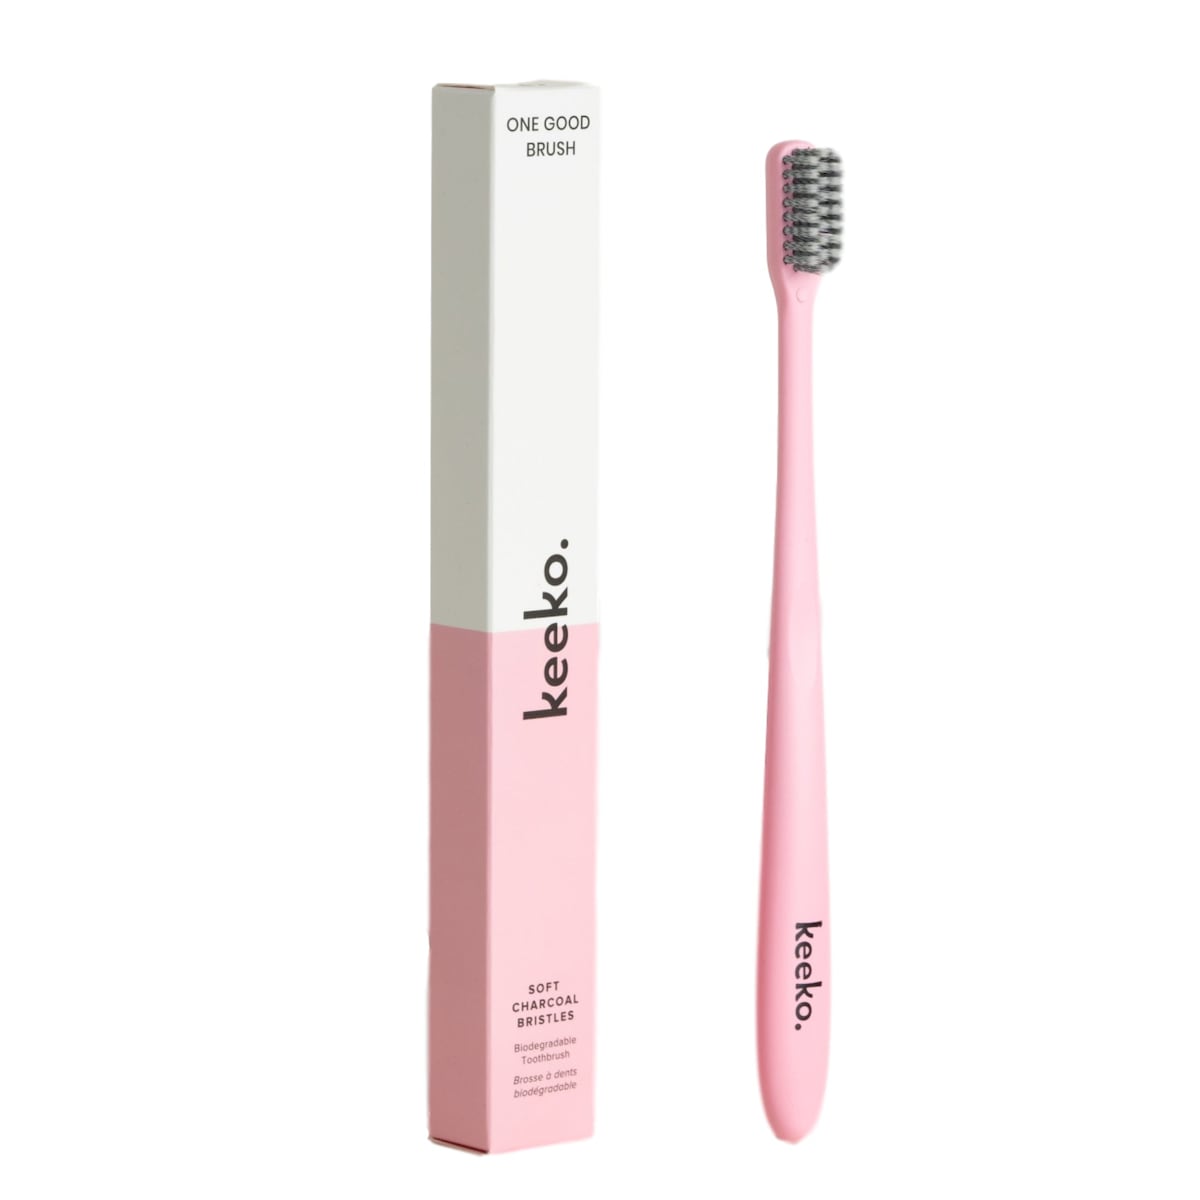 Keeko One Good Brush Biodegradable Toothbrush 1 Pack